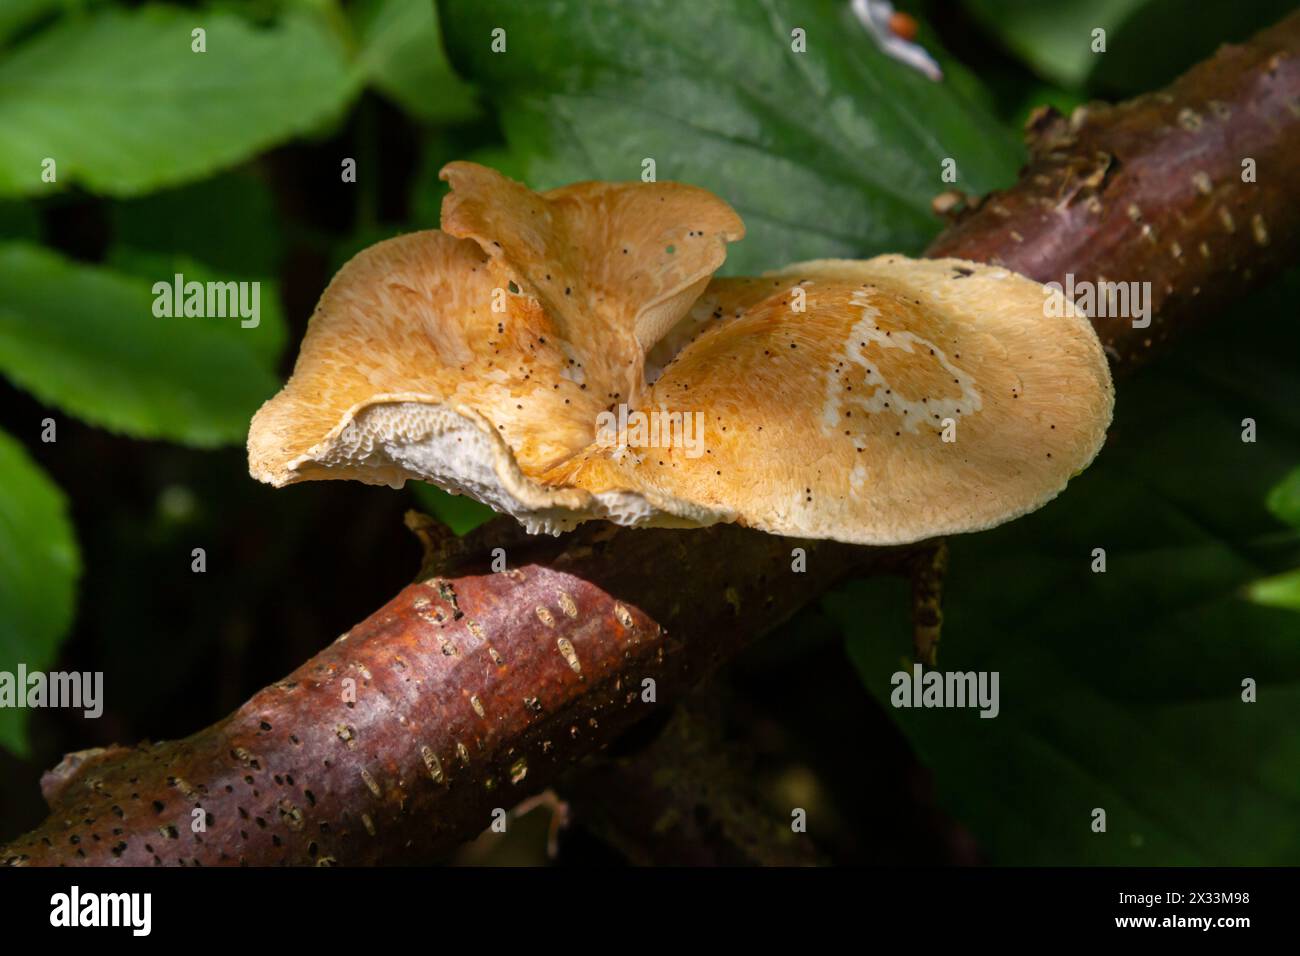 close up view of Turkey tail mushroom among the Polyporus alveolaris mushrooms found in the Bogor botanical gardens. Stock Photo